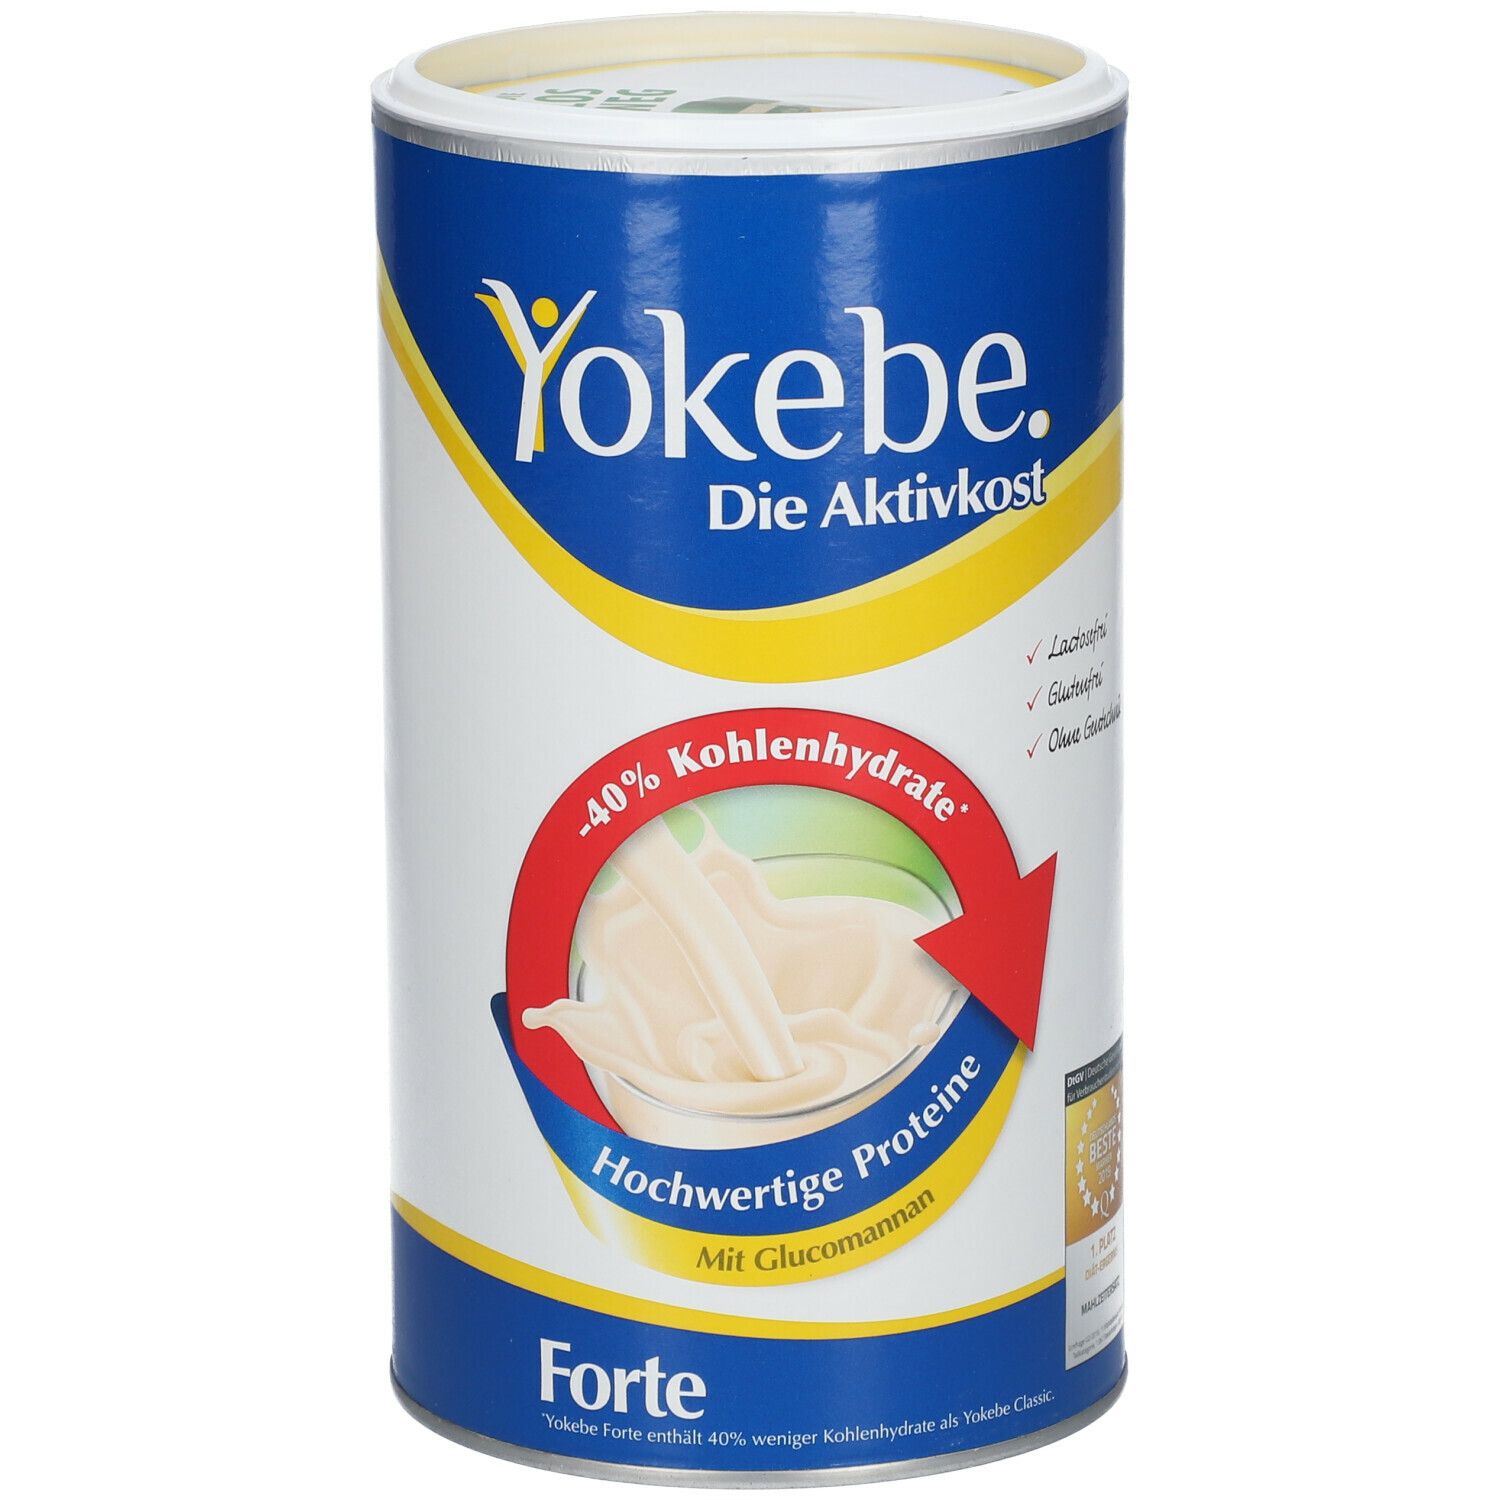 Yokebe Forte